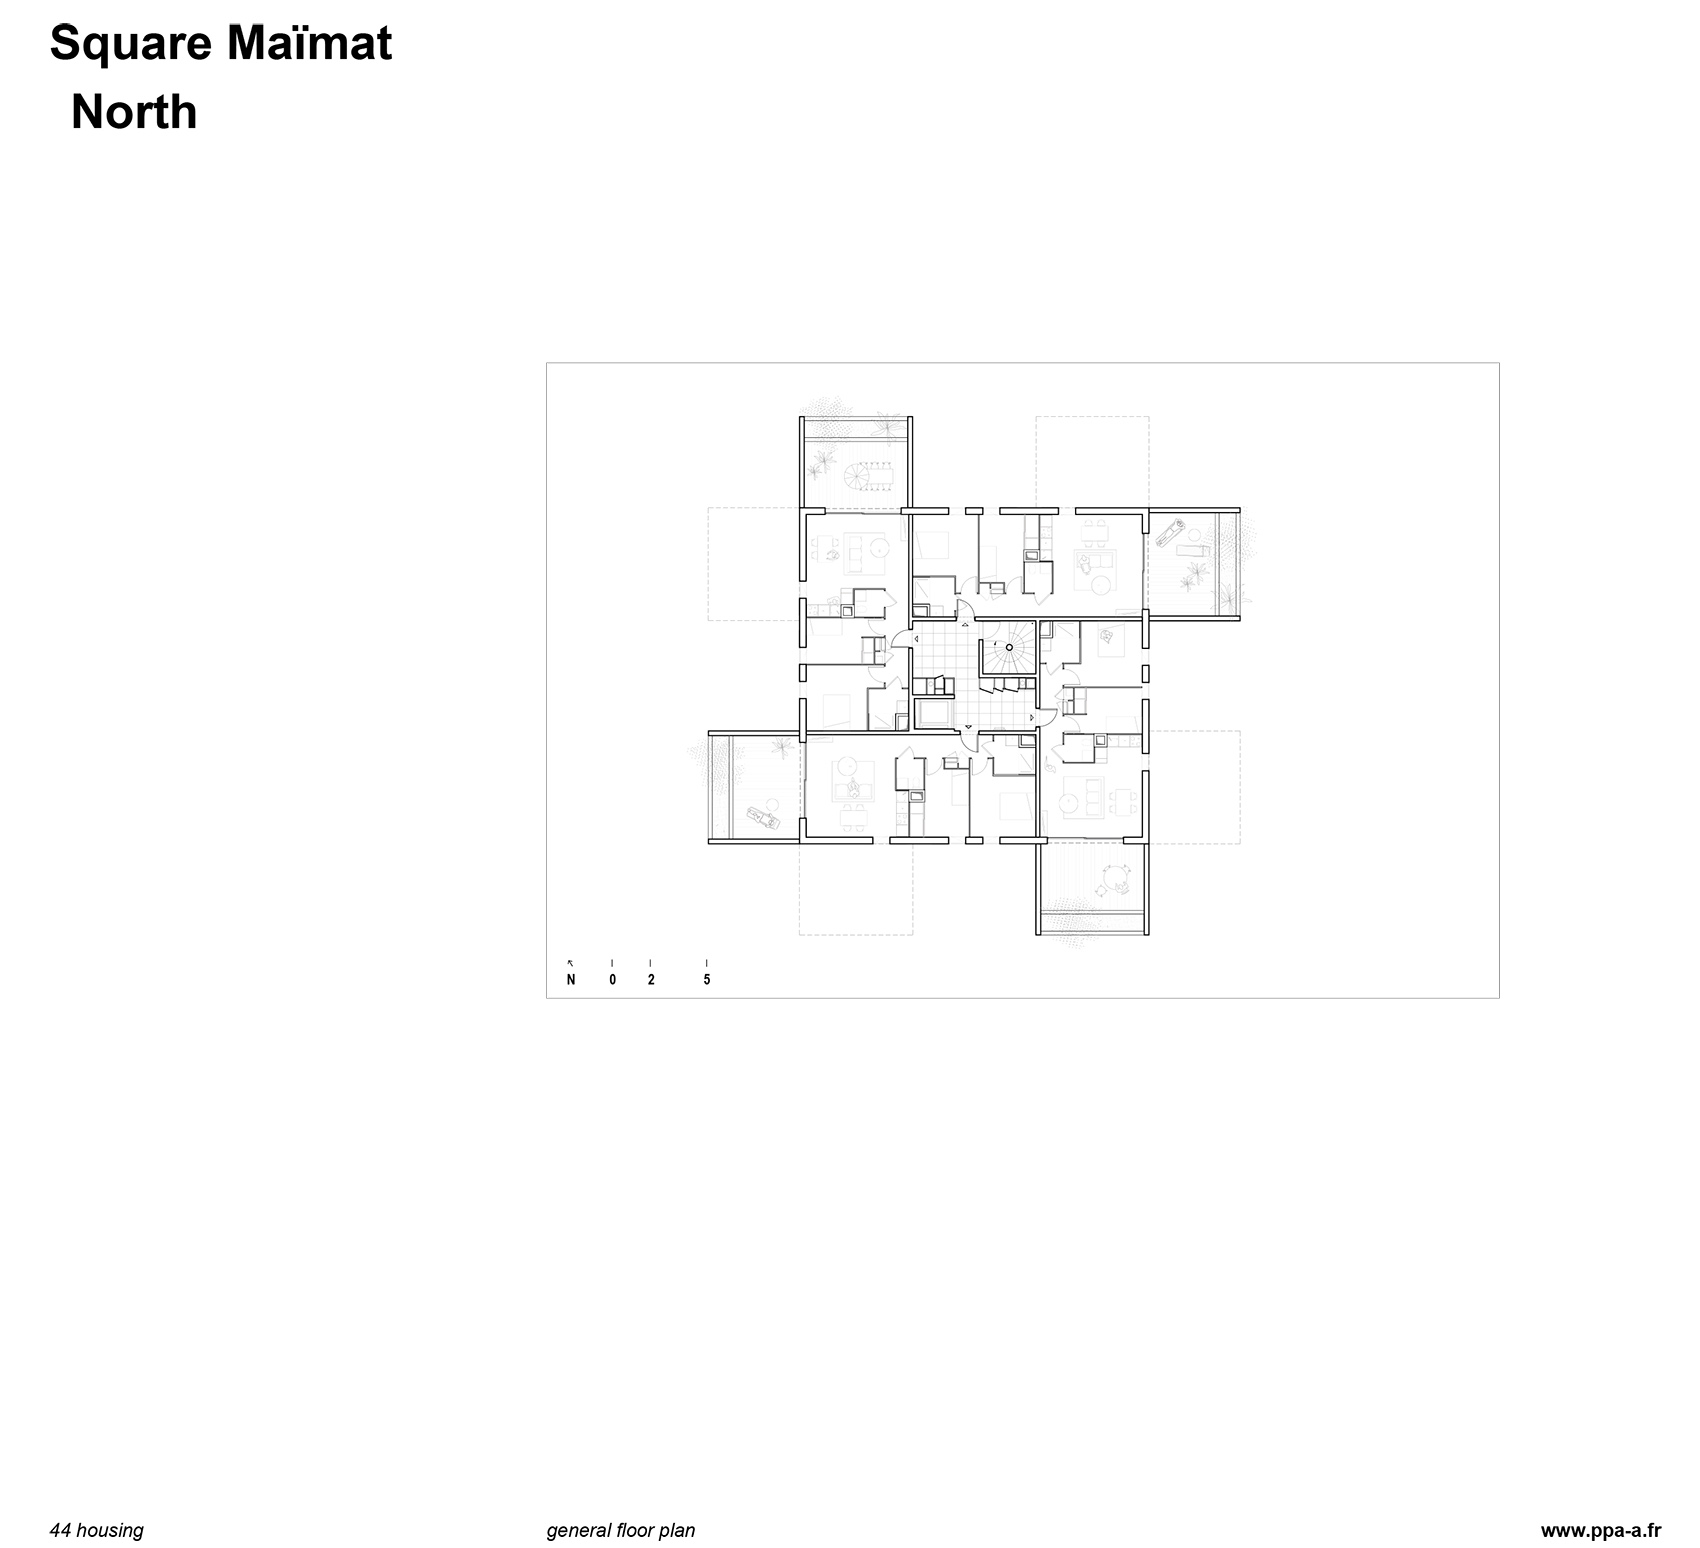 Square Maïmat住宅区更新，法国/释放公共空间，连接社区居民-112